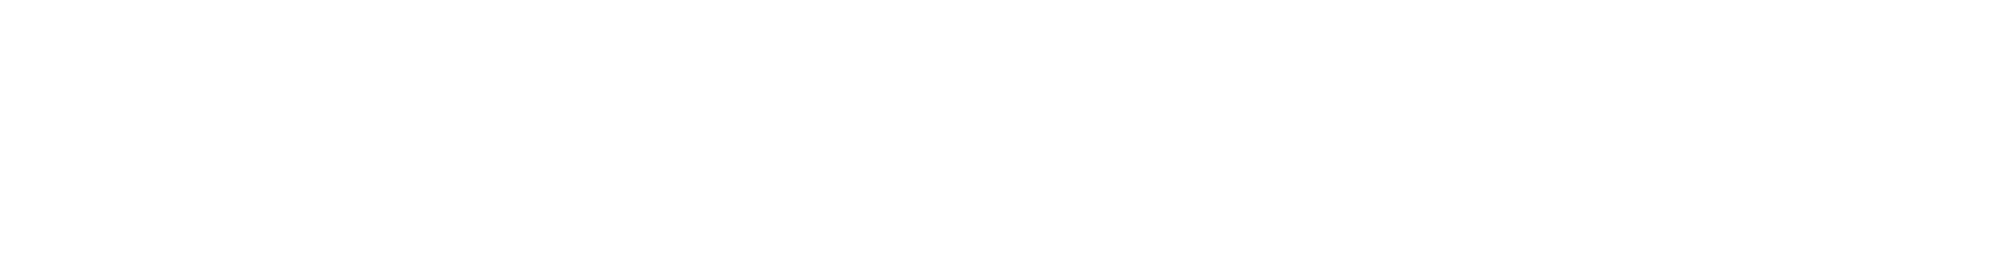 betterhelp-logo-white